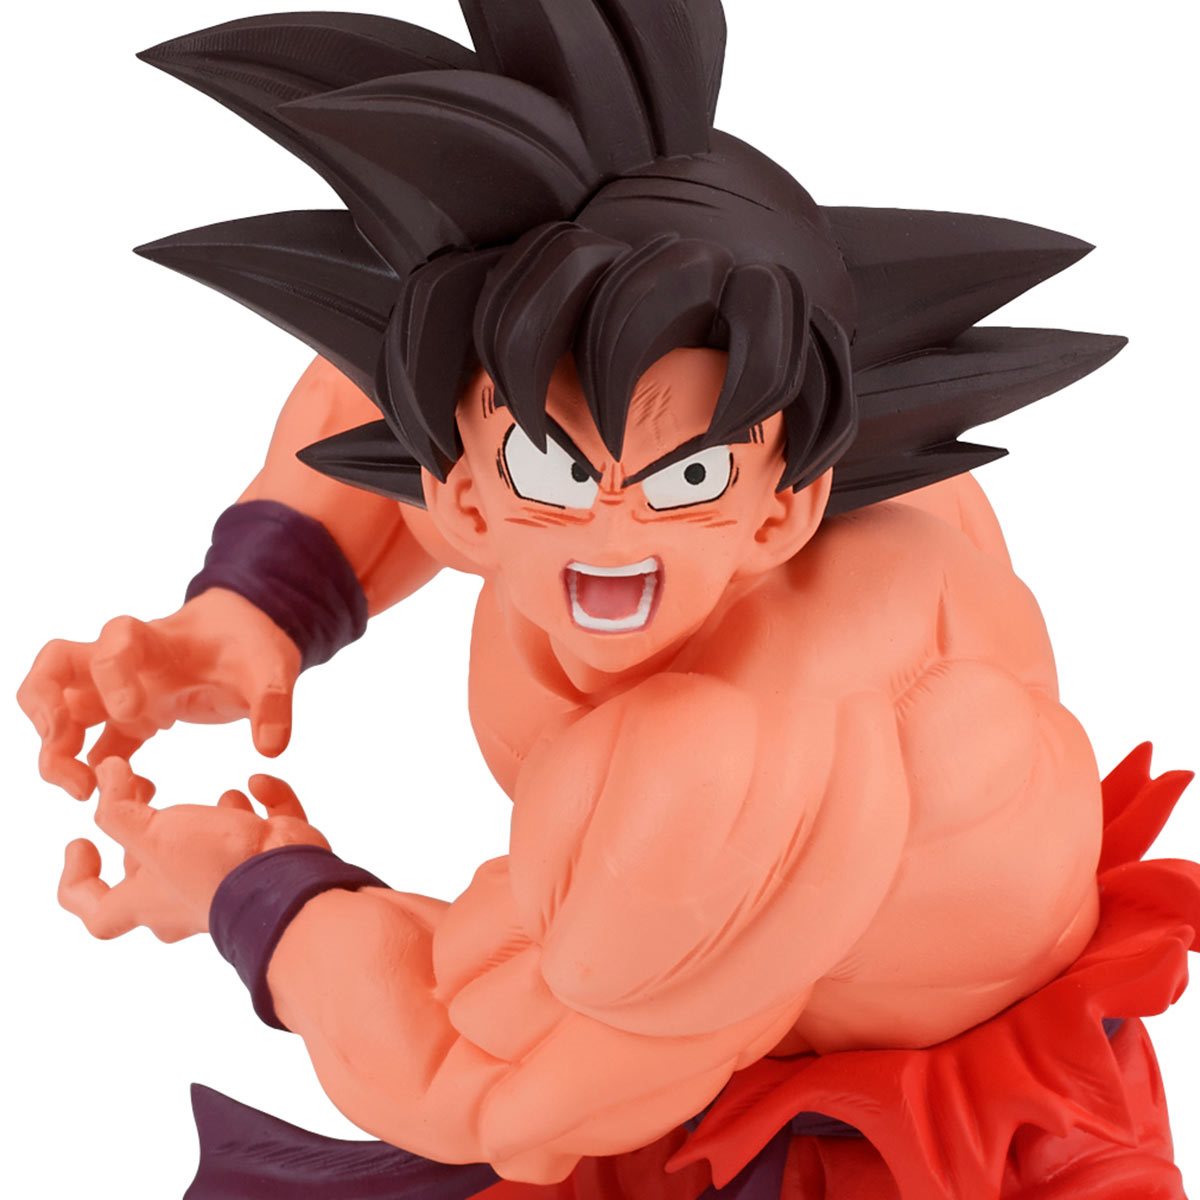 Super Hero Match Makers Dragon Ball Super Son Goku